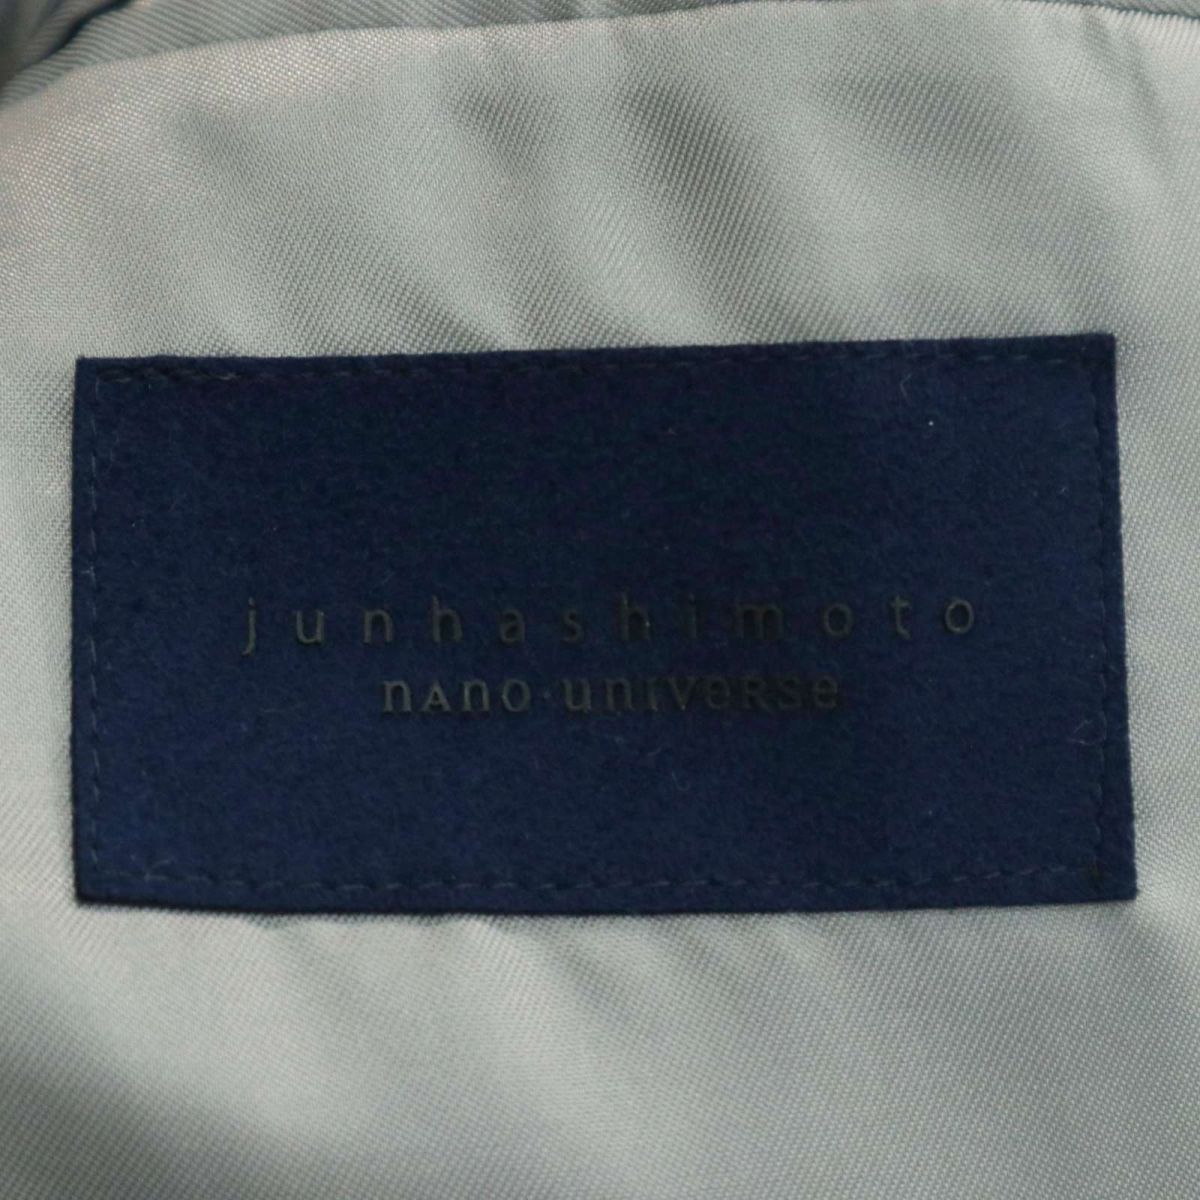 junhashimoto × nano universe Jun - si Moto Nano Universe осень-зима шерсть linen Пальто Честерфилд Sz.S мужской серый A3T11670_A#N